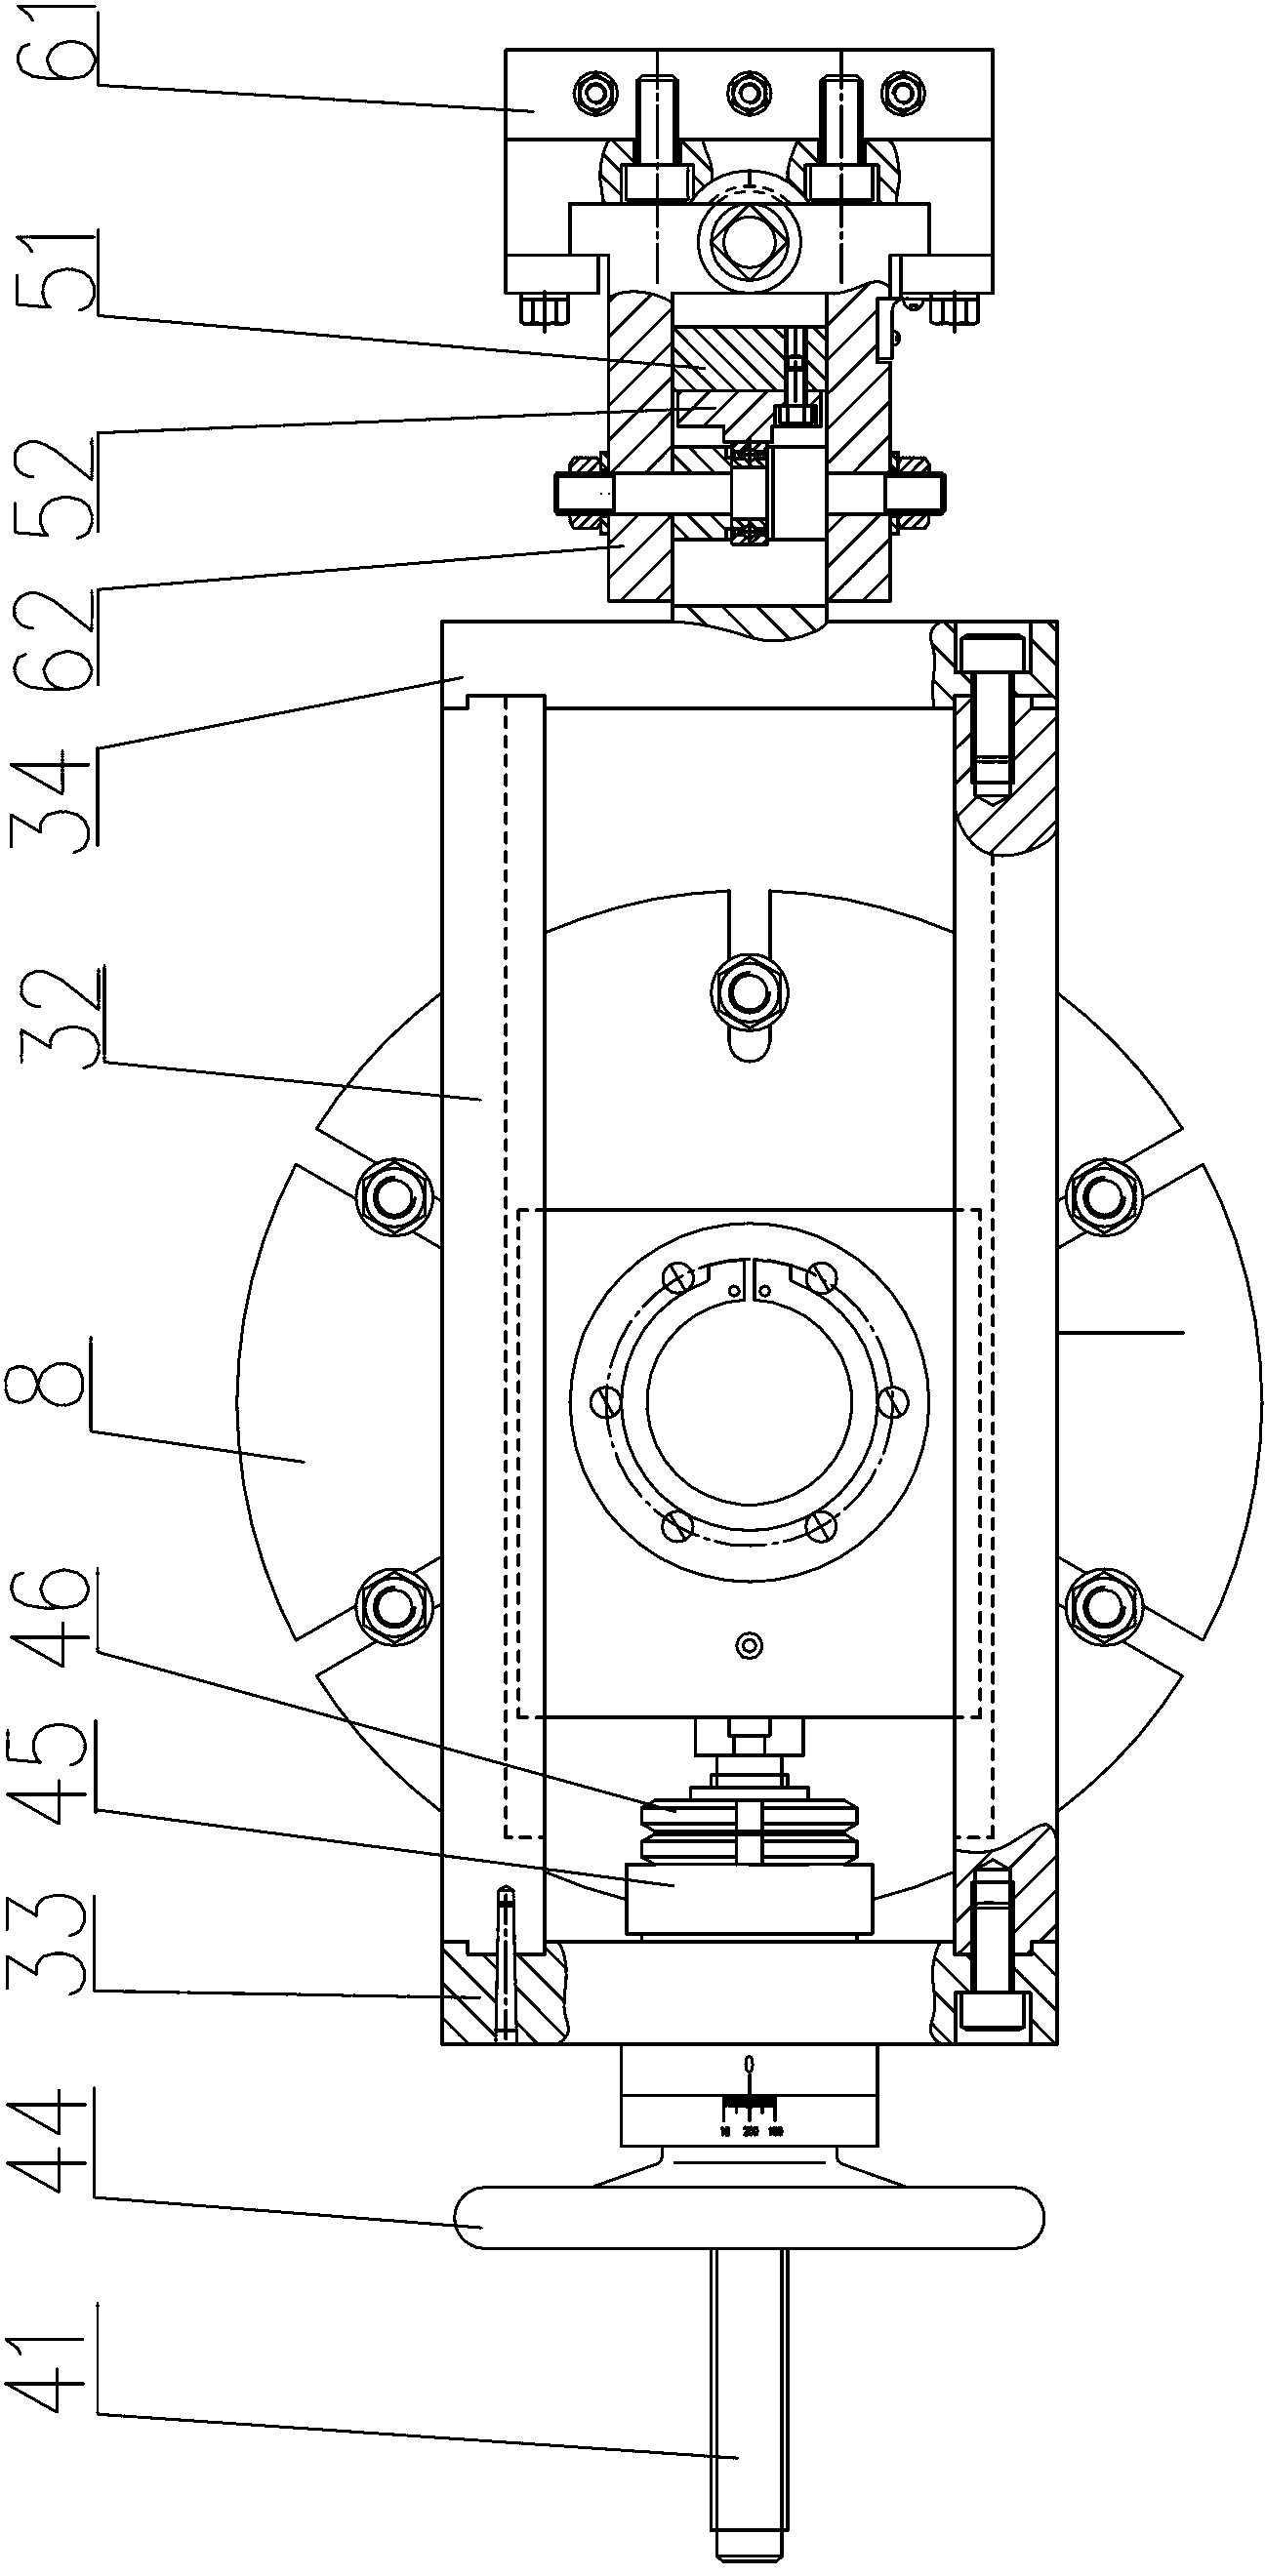 Device assisting ordinary gear hobbing machine in machining arc-shaped gear